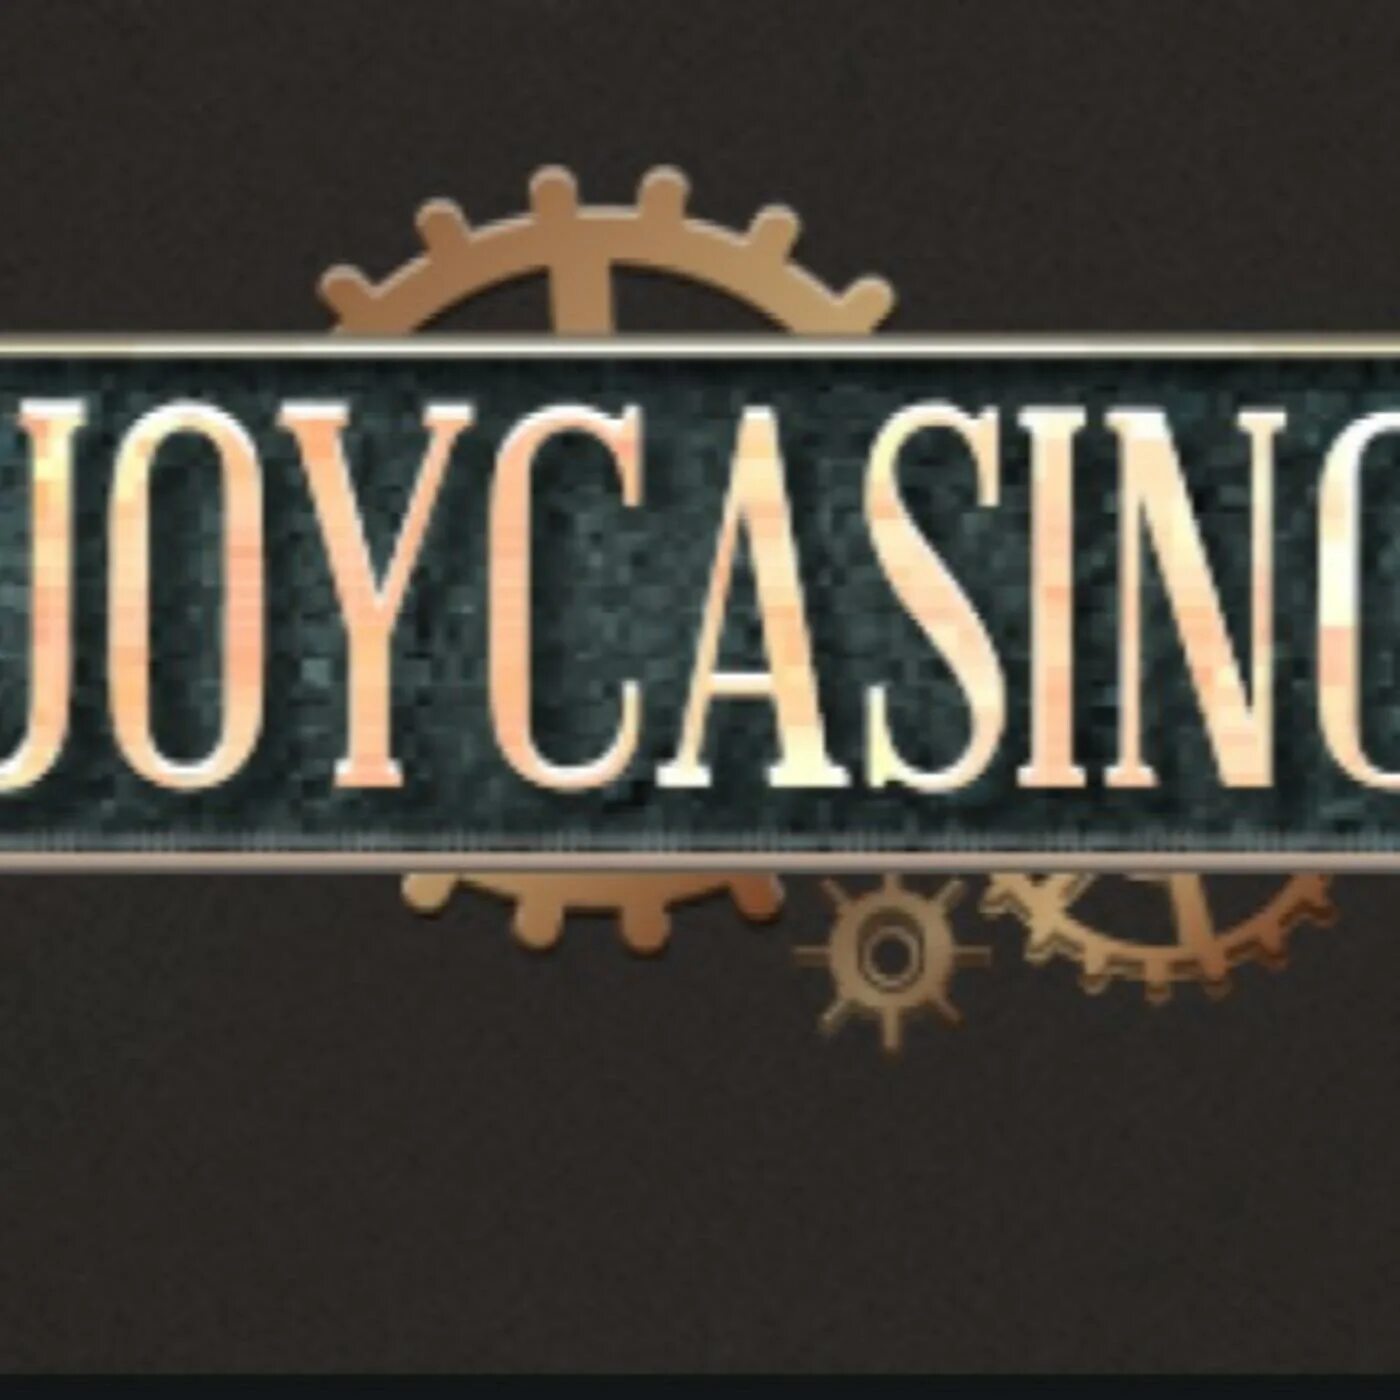 Joycasino. Джой казино. Joycasino logo. Joycasino 1423.